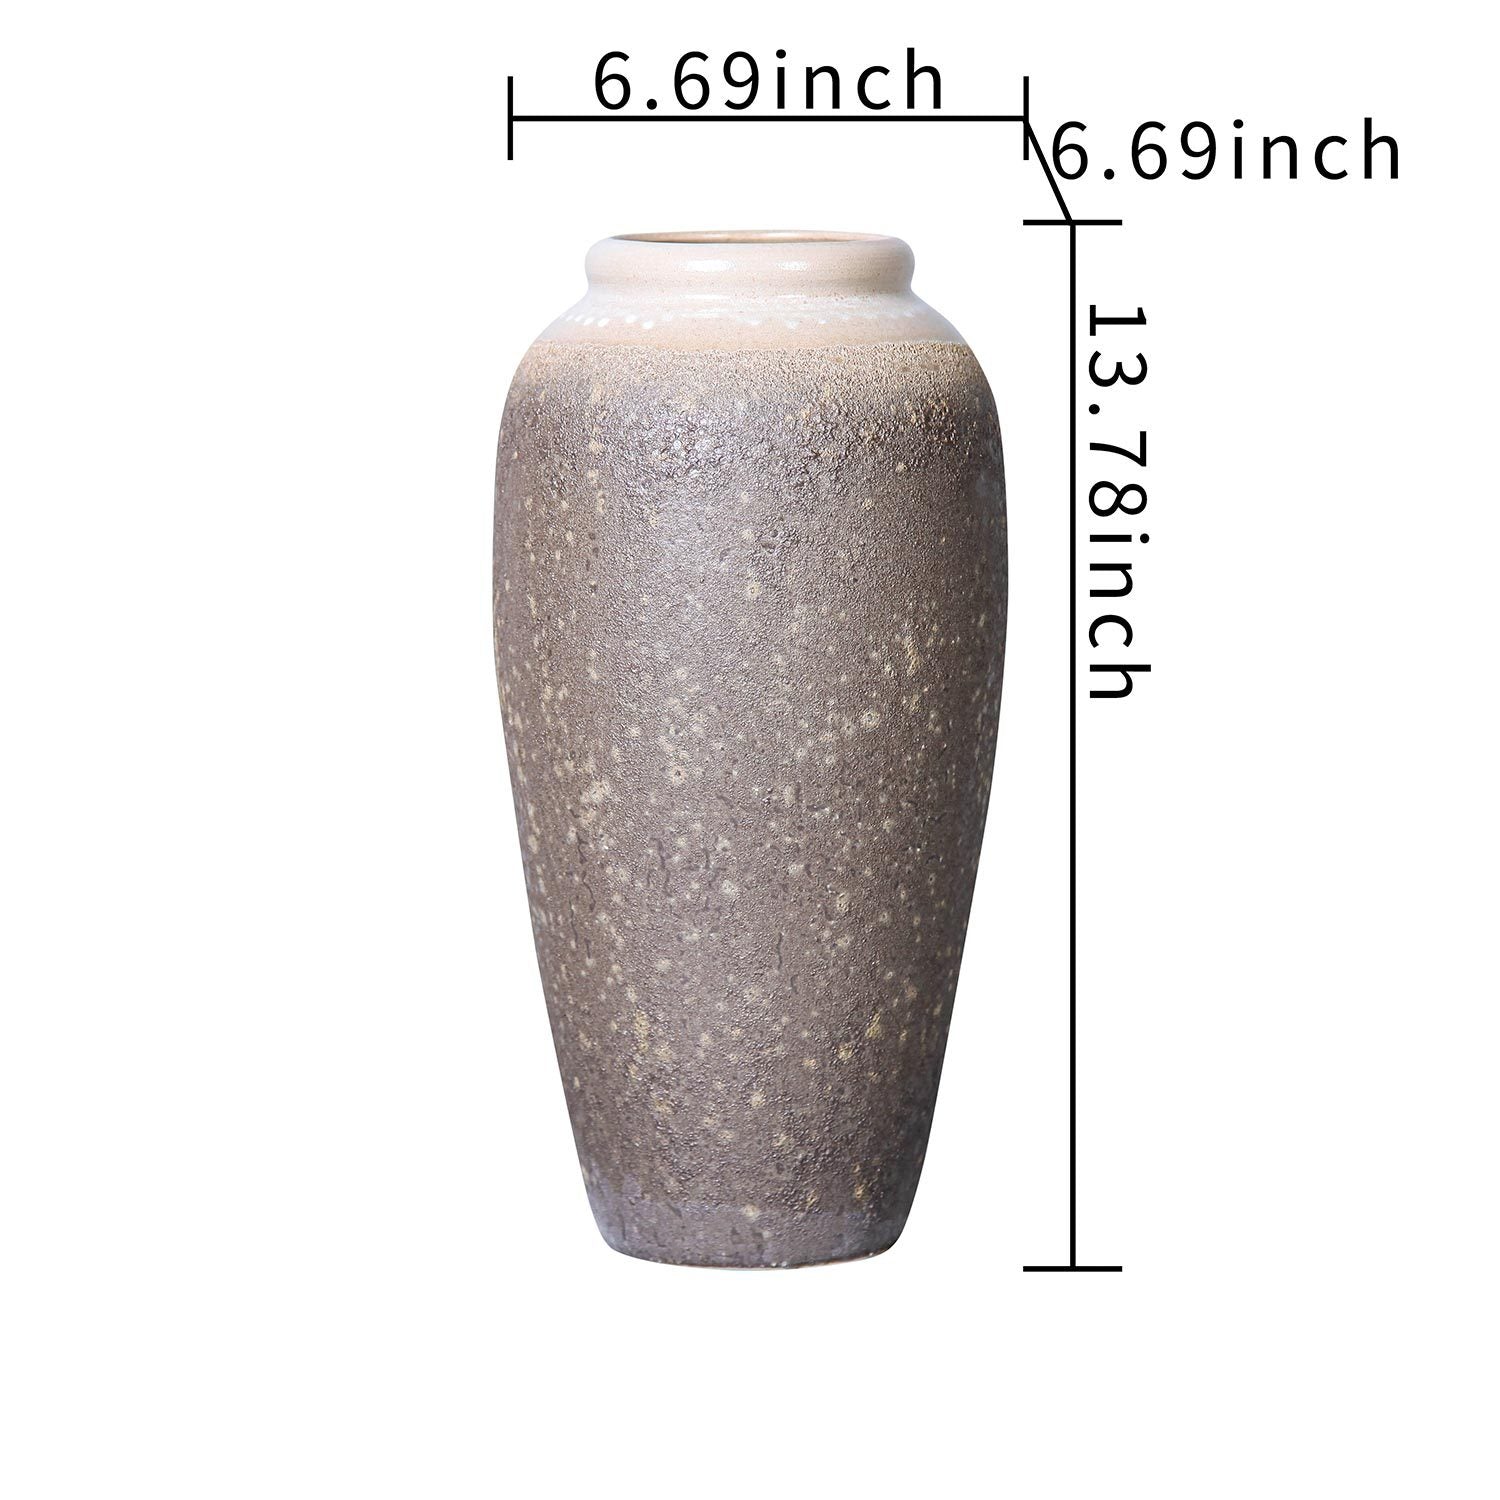 Vintage Sand Ceramic Vase 6.5"D x 13.5"H Artisanal retro gray-ceramic